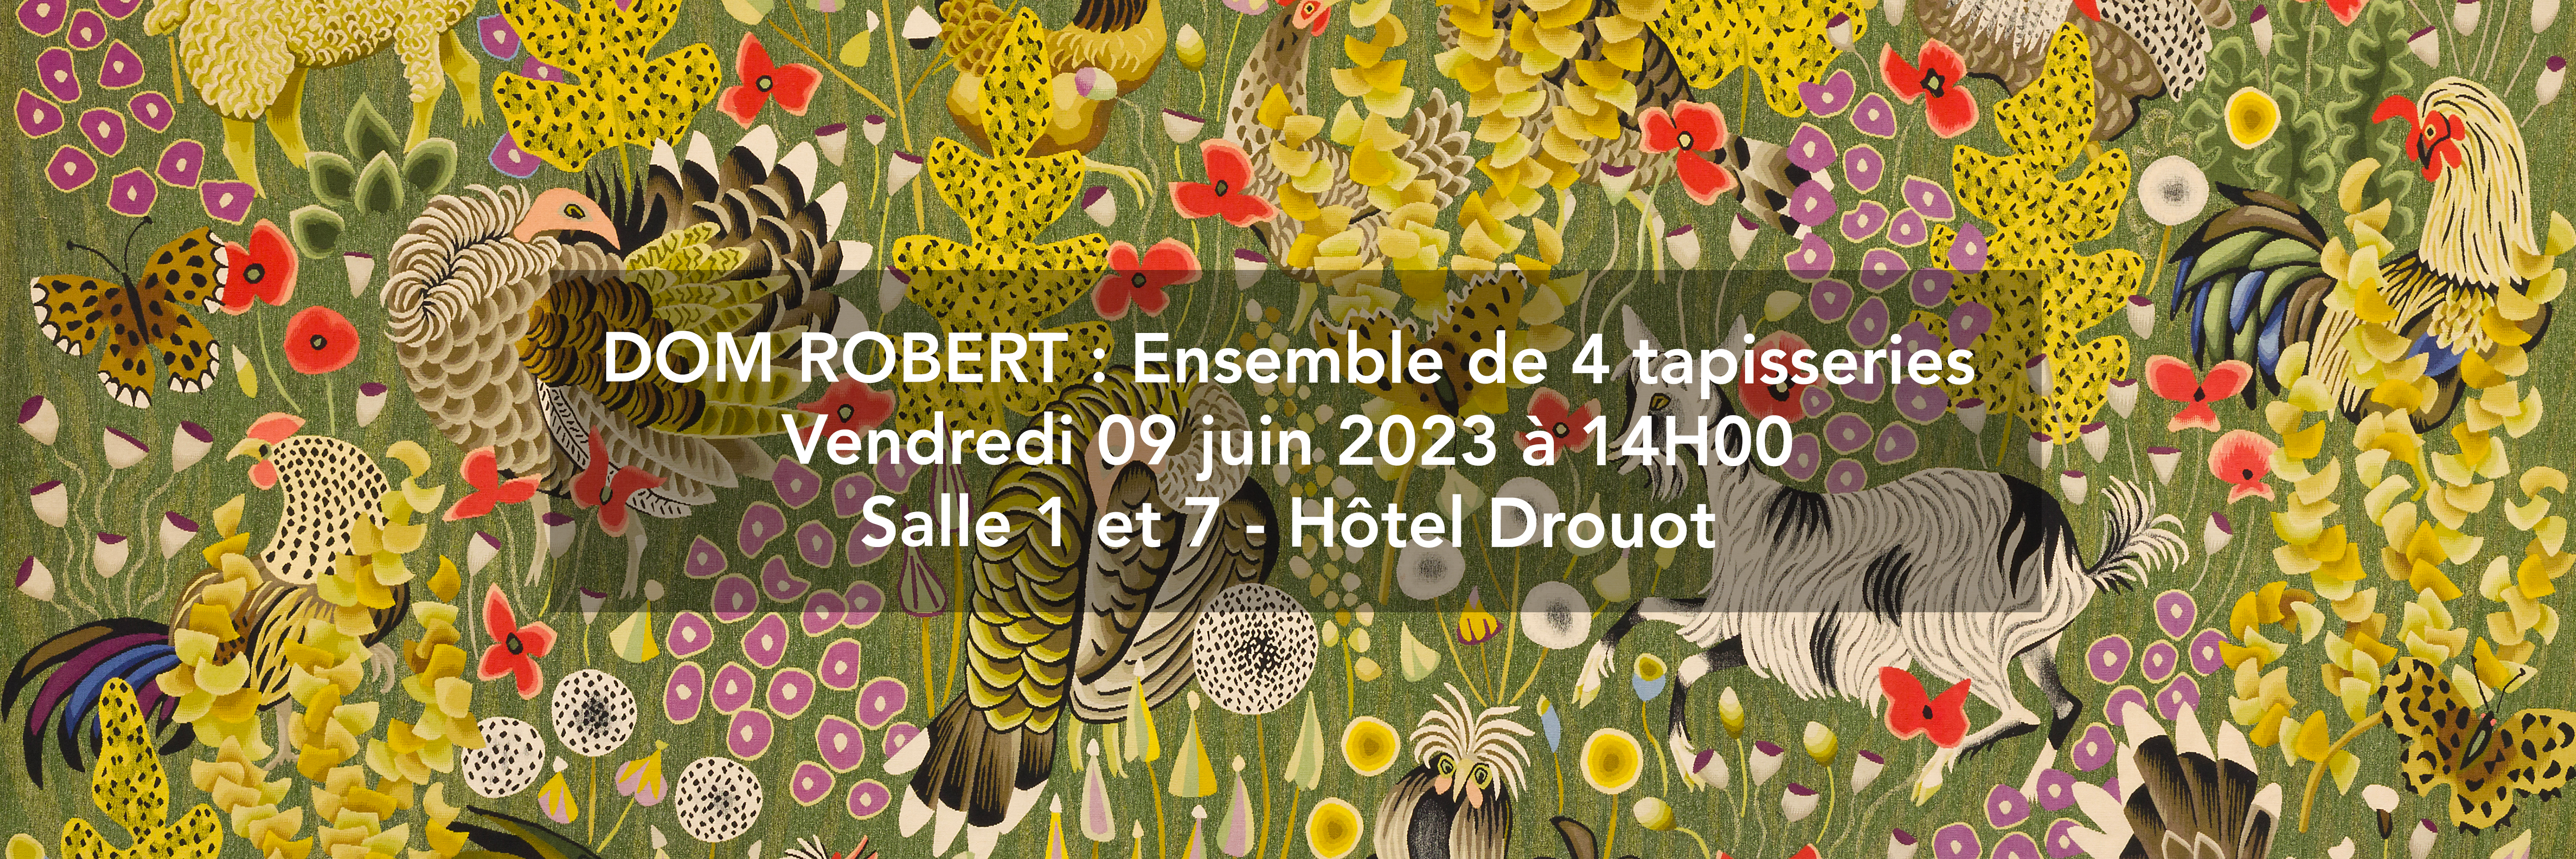 DOM ROBERT : Ensemble de 4 tapisseries